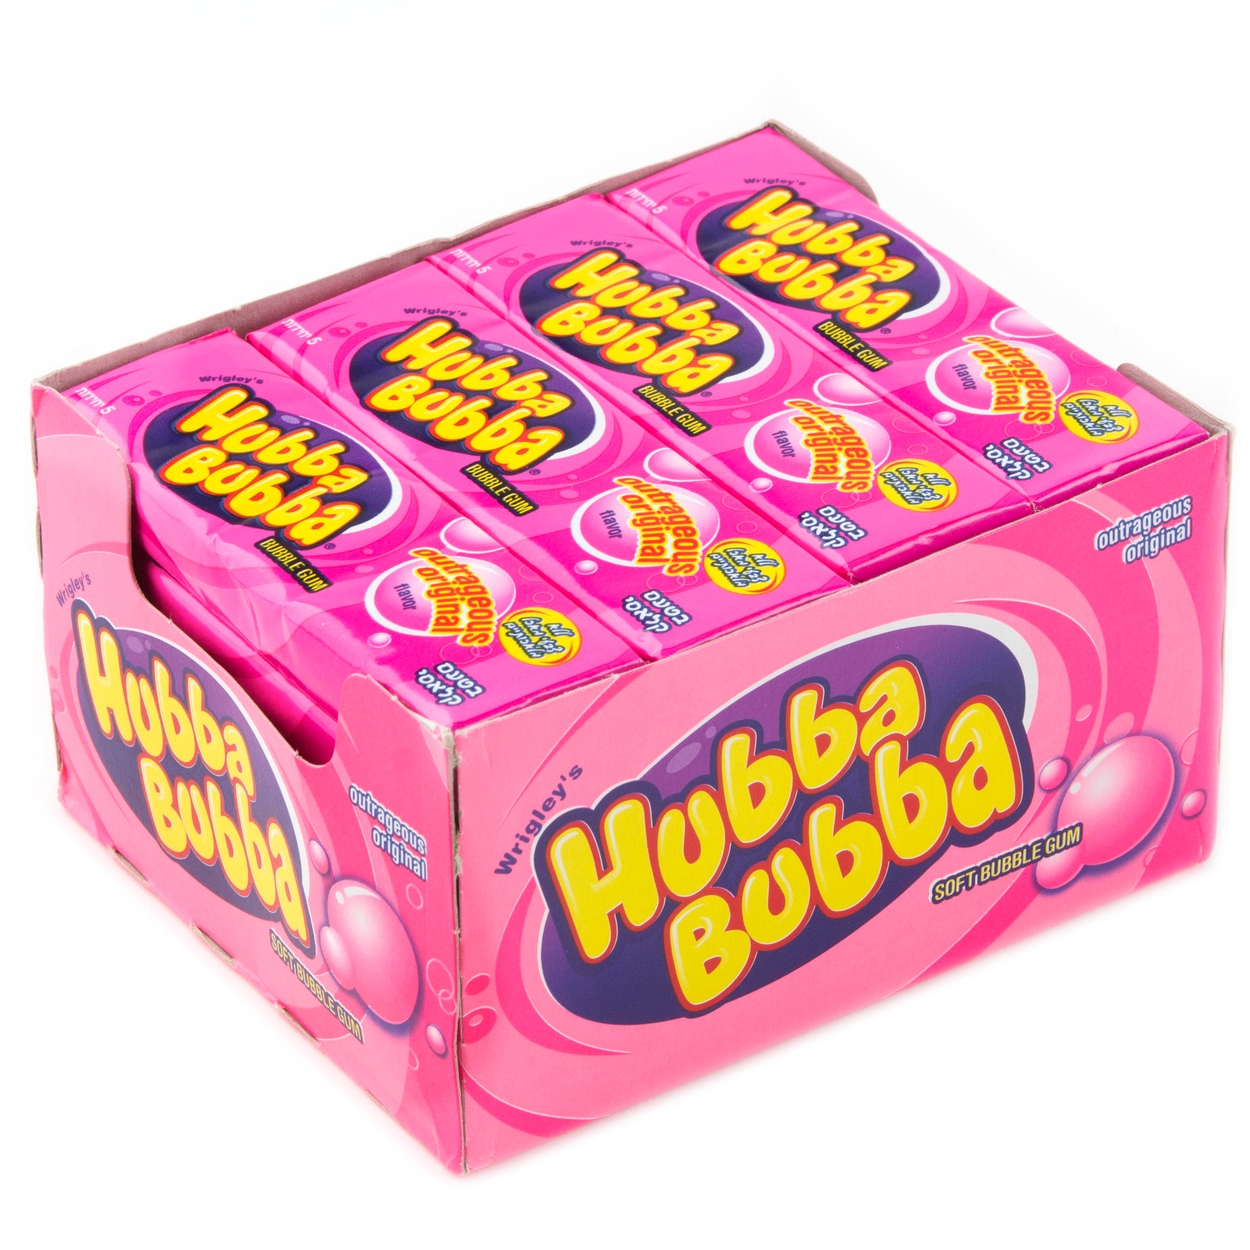 Hubba Bubba Kosher Mega Long Chewing Gum Triple Mix - Shop Gum & Mints at  H-E-B